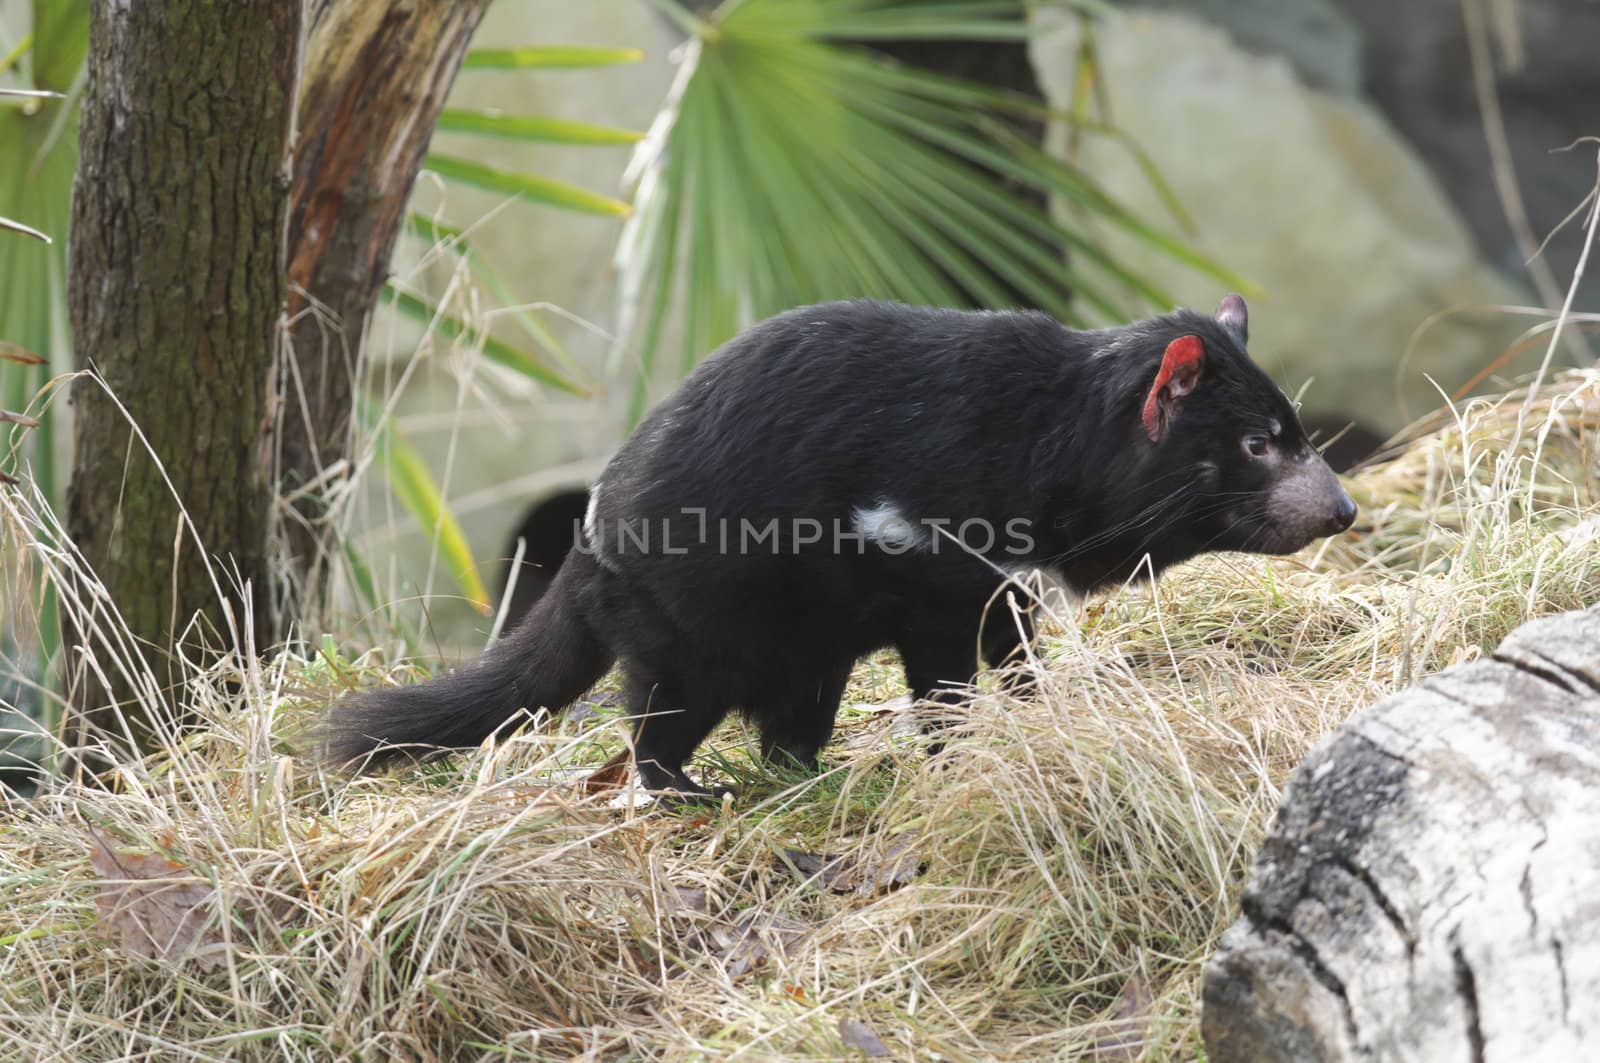 Rare Tasmanian devil (Sarcophilus harrisii) by AlessandroZocc